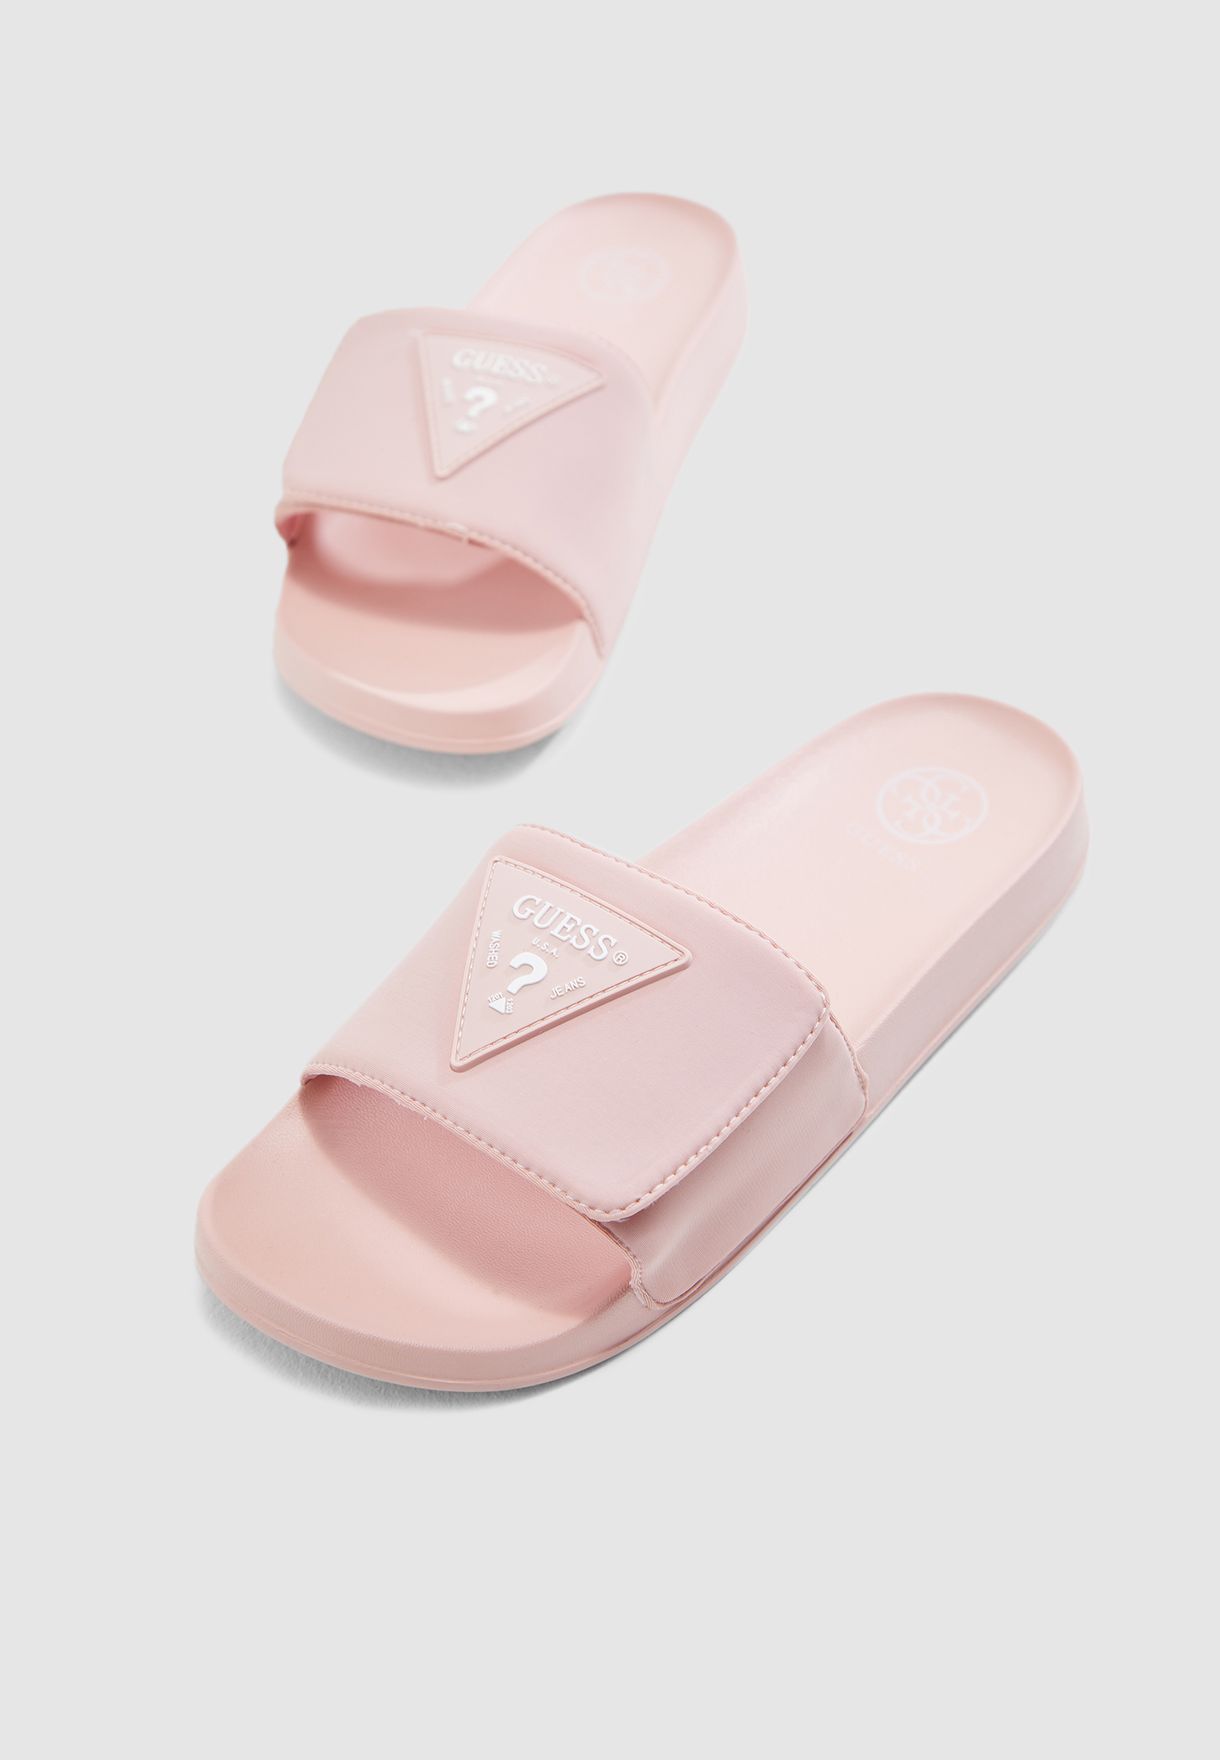 guess sandals pink